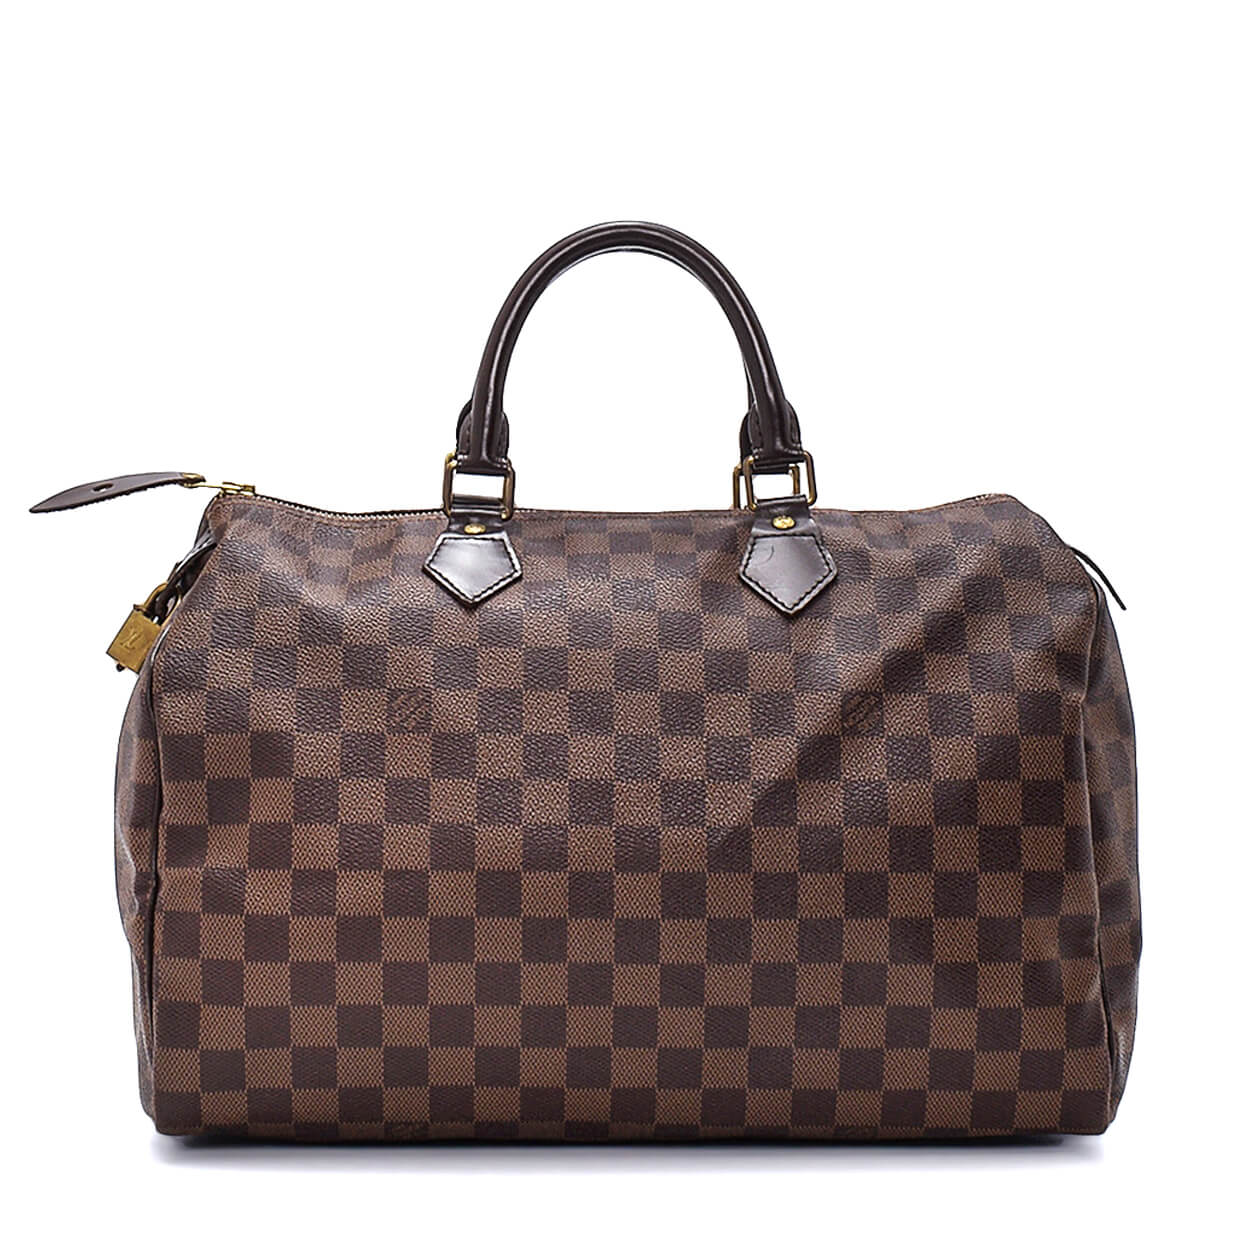 Louis Vuitton - Damier Ebene Canvas Speedy 35 Bag